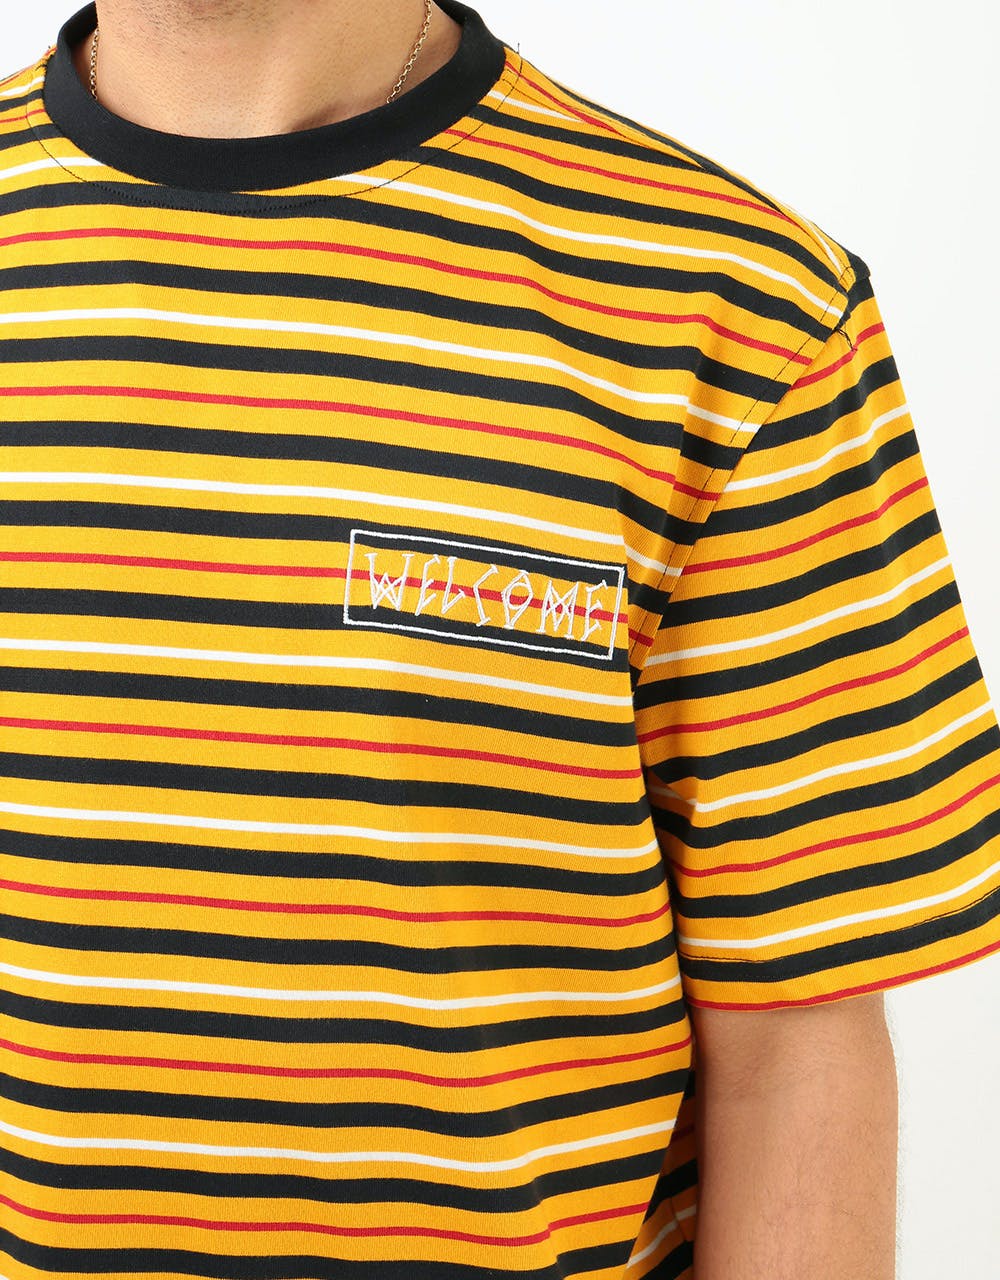 Welcome Surf Stripe S/S Knit T-Shirt - Gold/Black/Bone